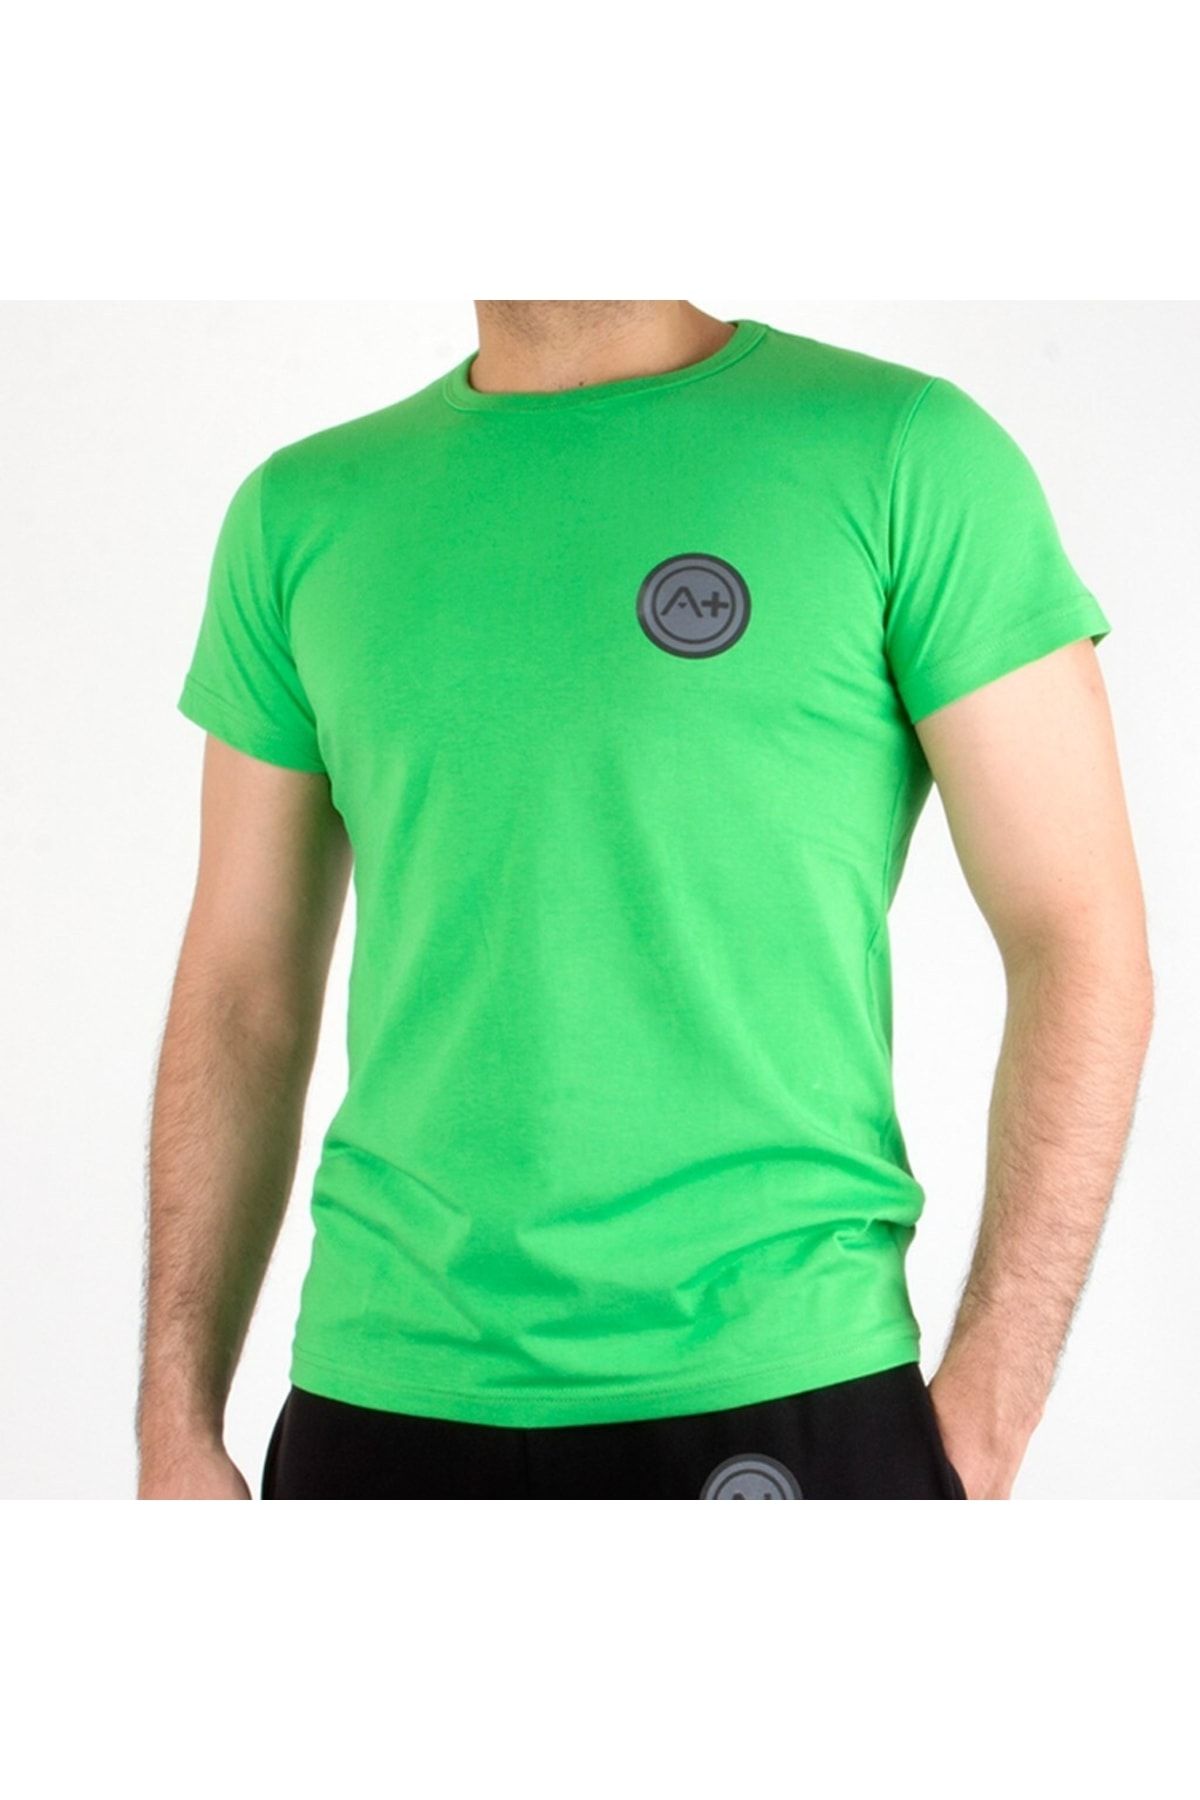 Sail Lakers A+ Palermo Erkek Yeşil Basic T-shirt